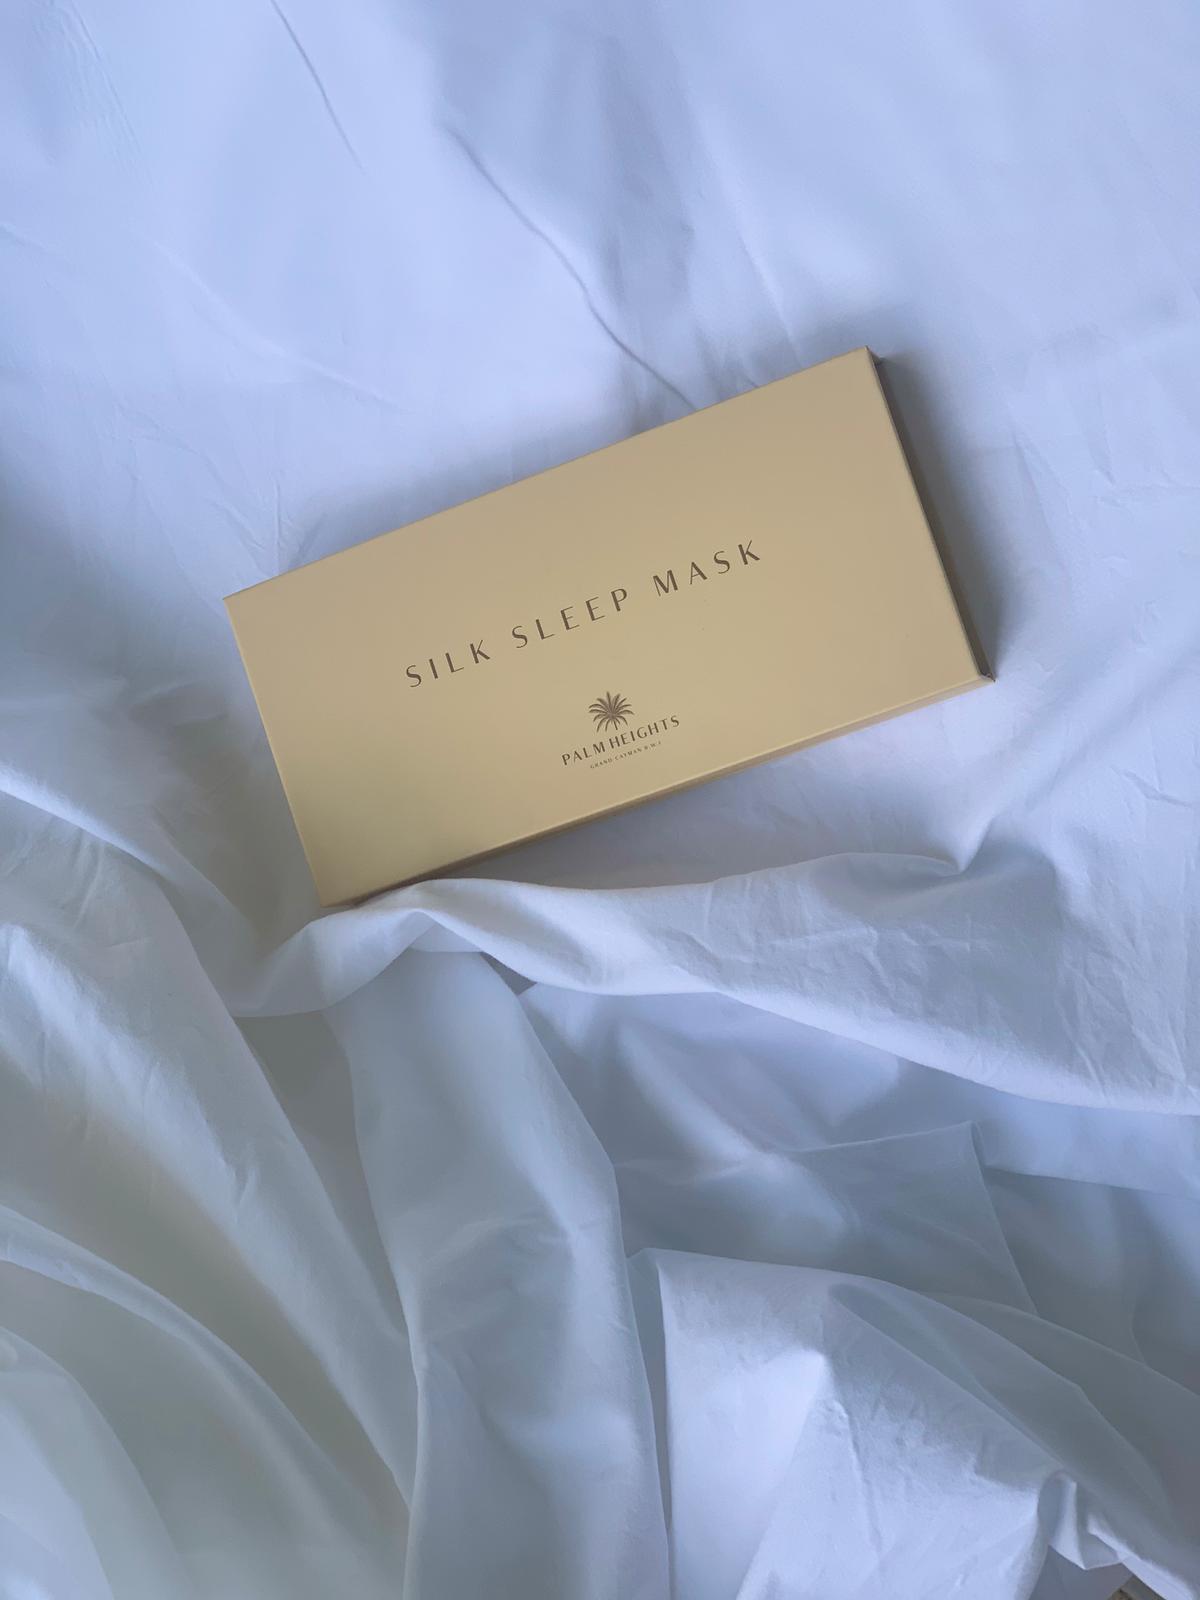 silk sleeping mask gift box 